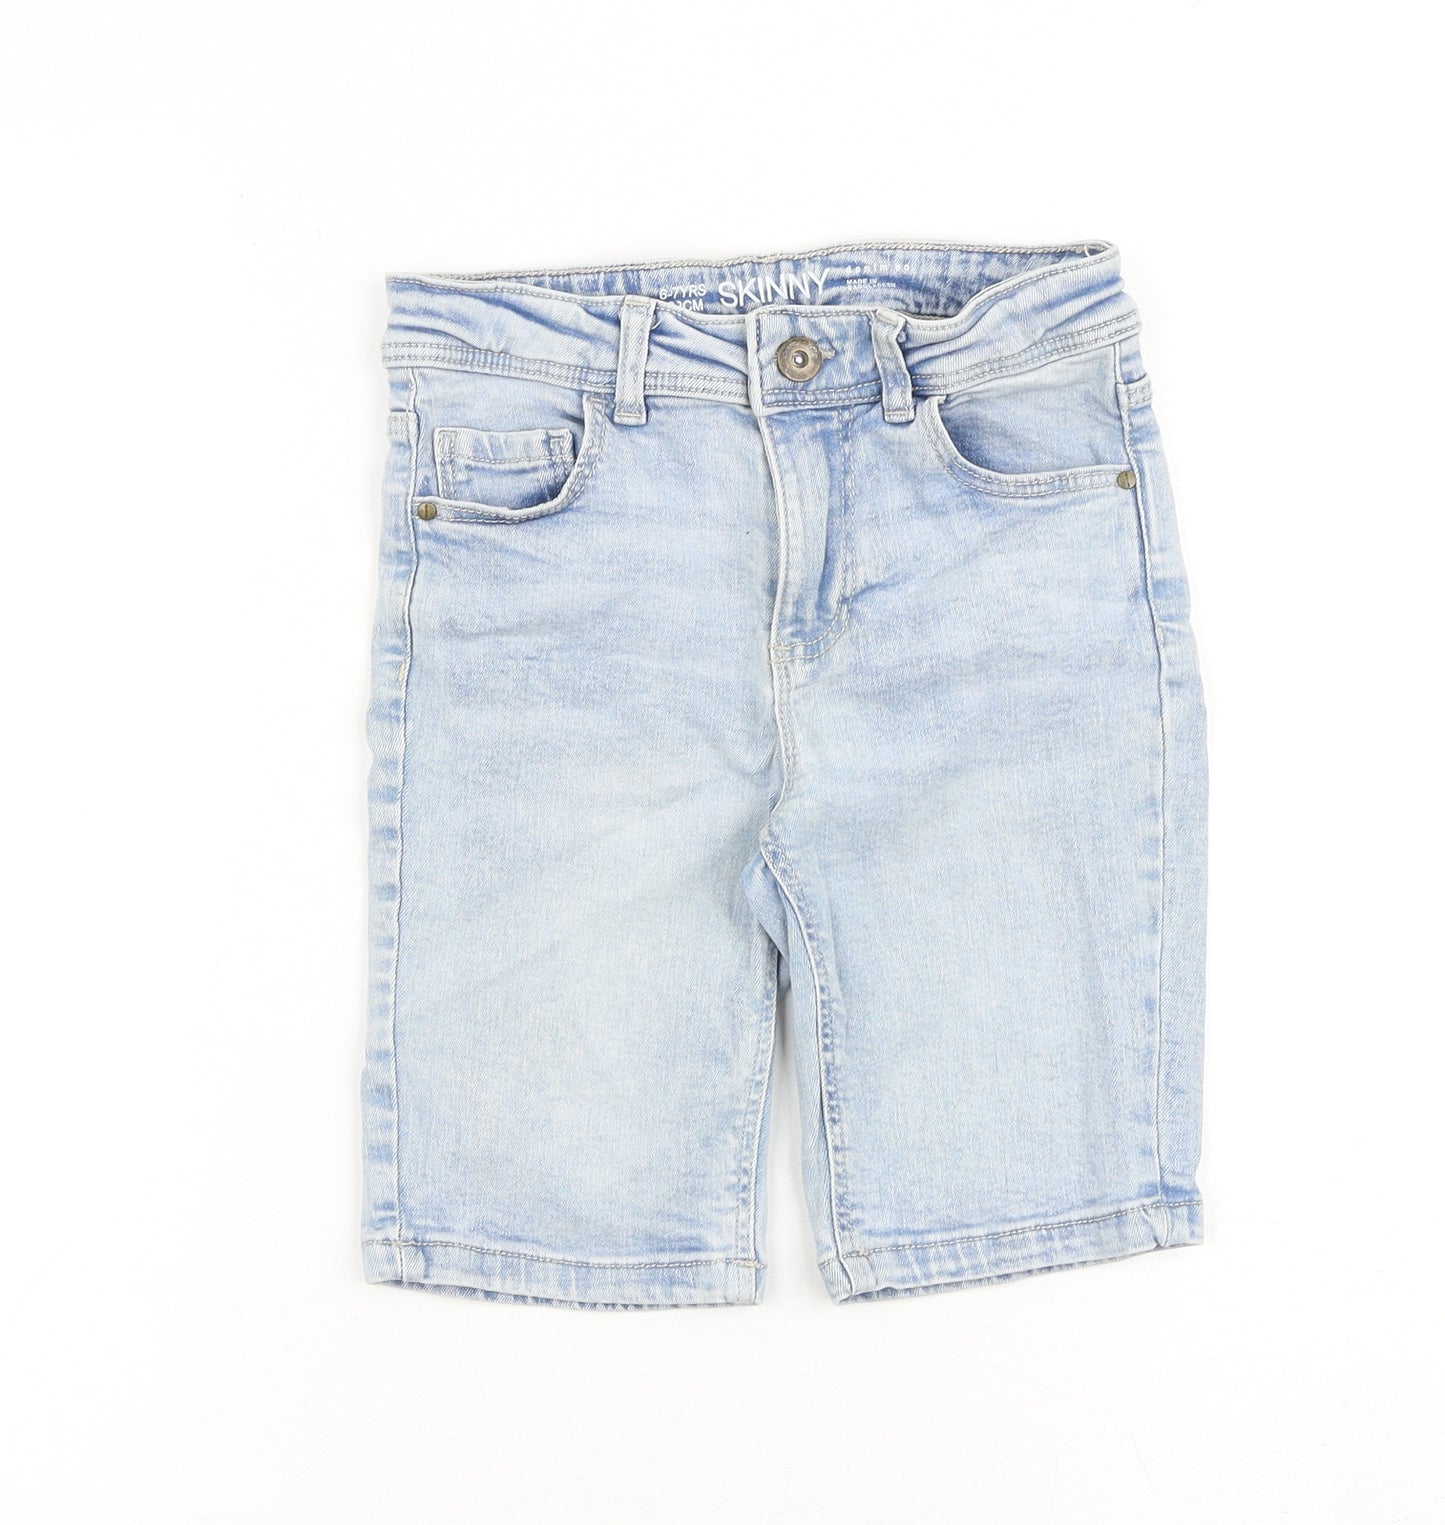 Denim & Co. Boys Blue Cotton Bermuda Shorts Size 6-7 Years Regular Zip